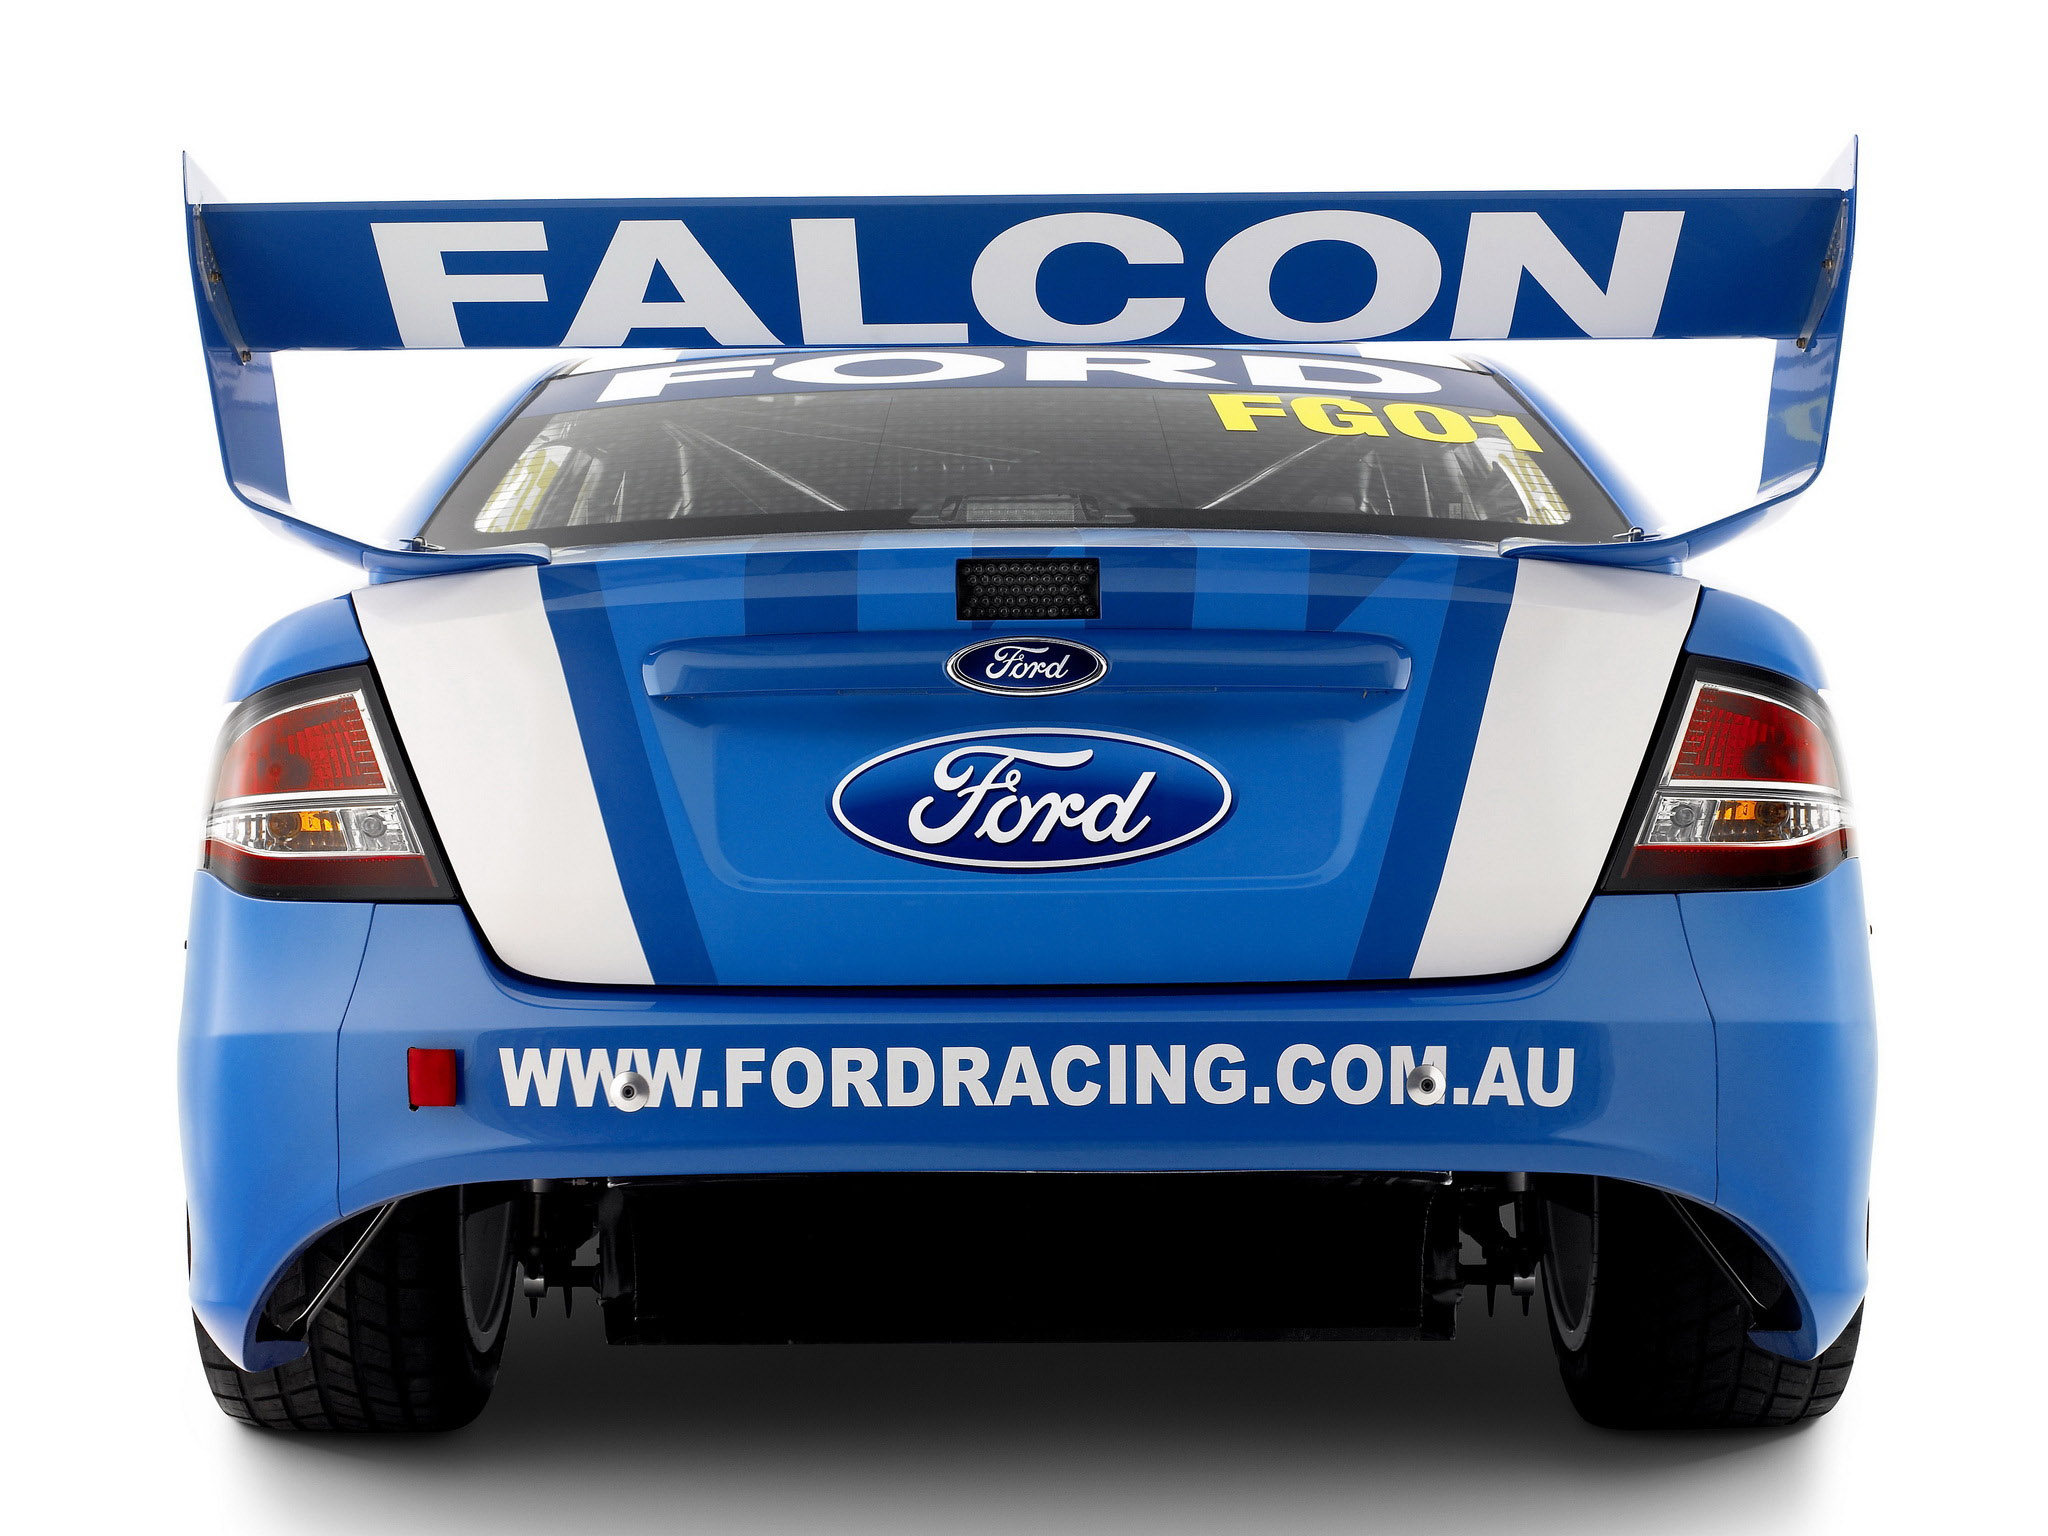 2008, Ford, Falcon, Fg01, Race, Racing, Tuning Wallpaper